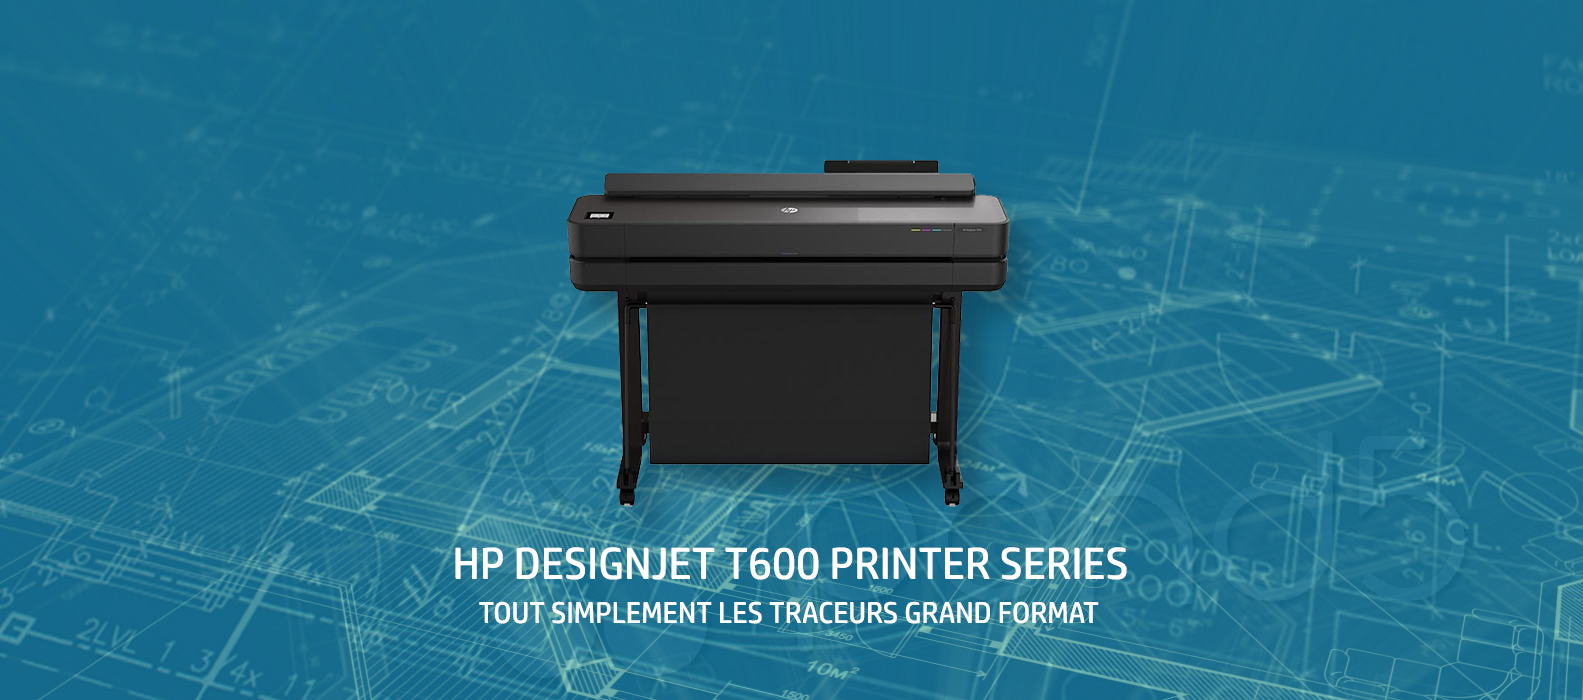 HP DESIGNJET T600